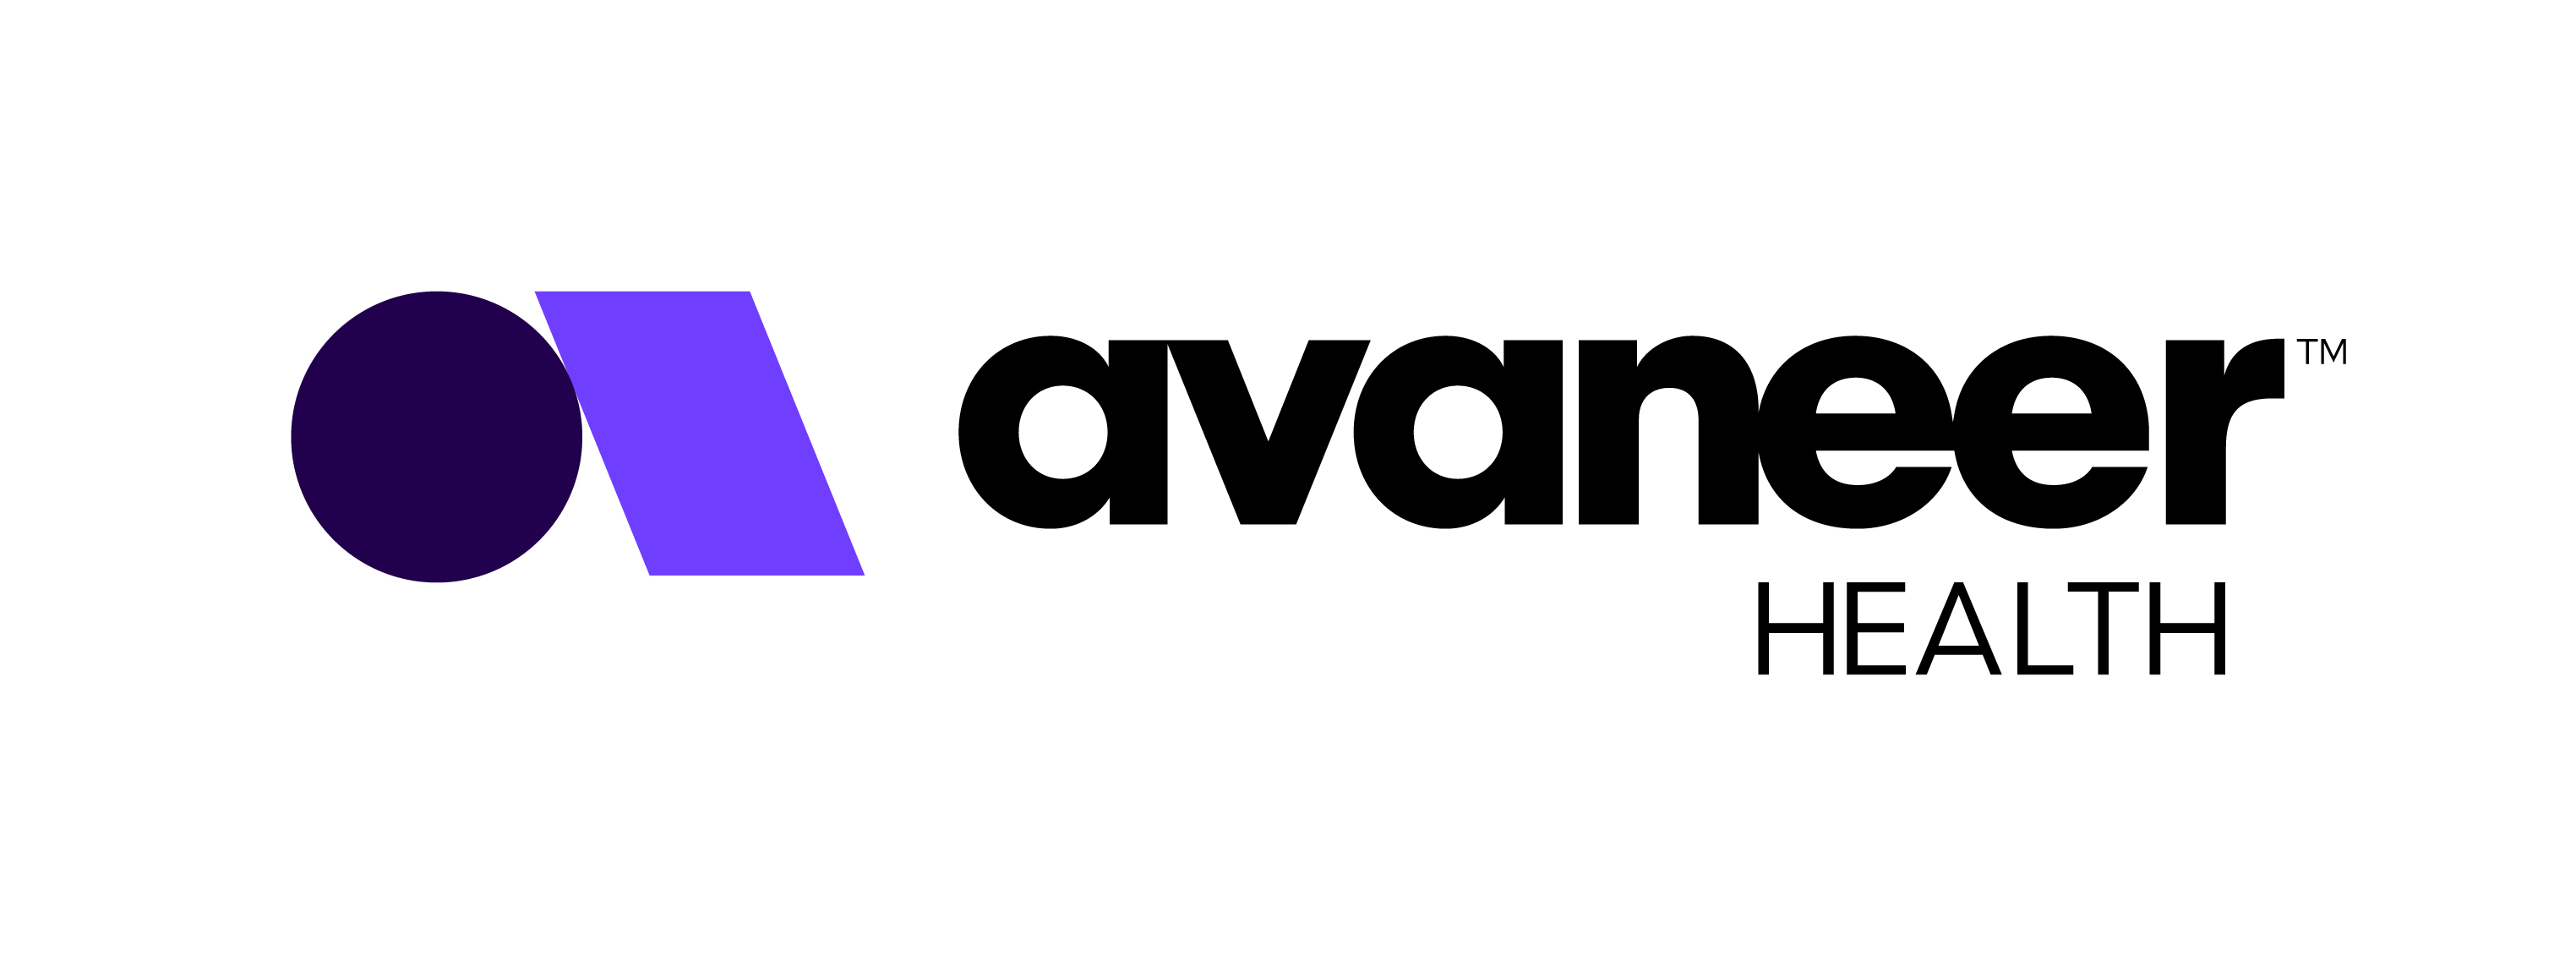 Avaneer Health logo